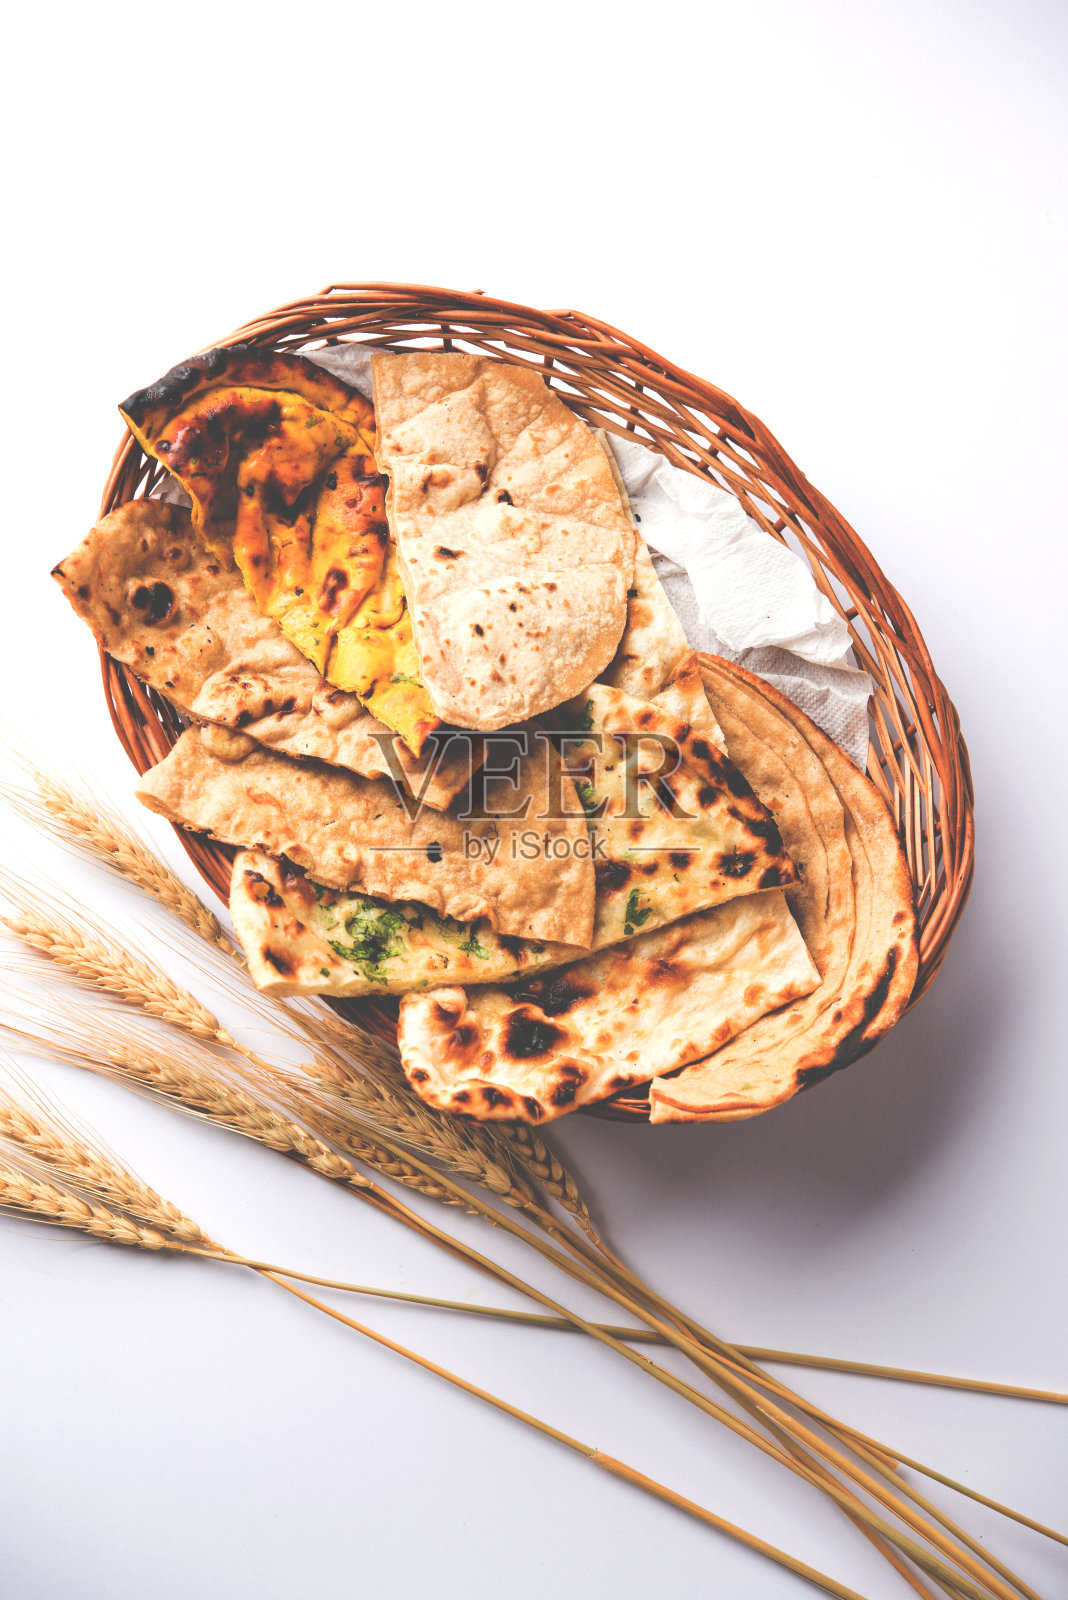 Assorted印度面包包括chapati、tandoori面包、馕饼、paratha、kulcha、fulka、missi面包照片摄影图片